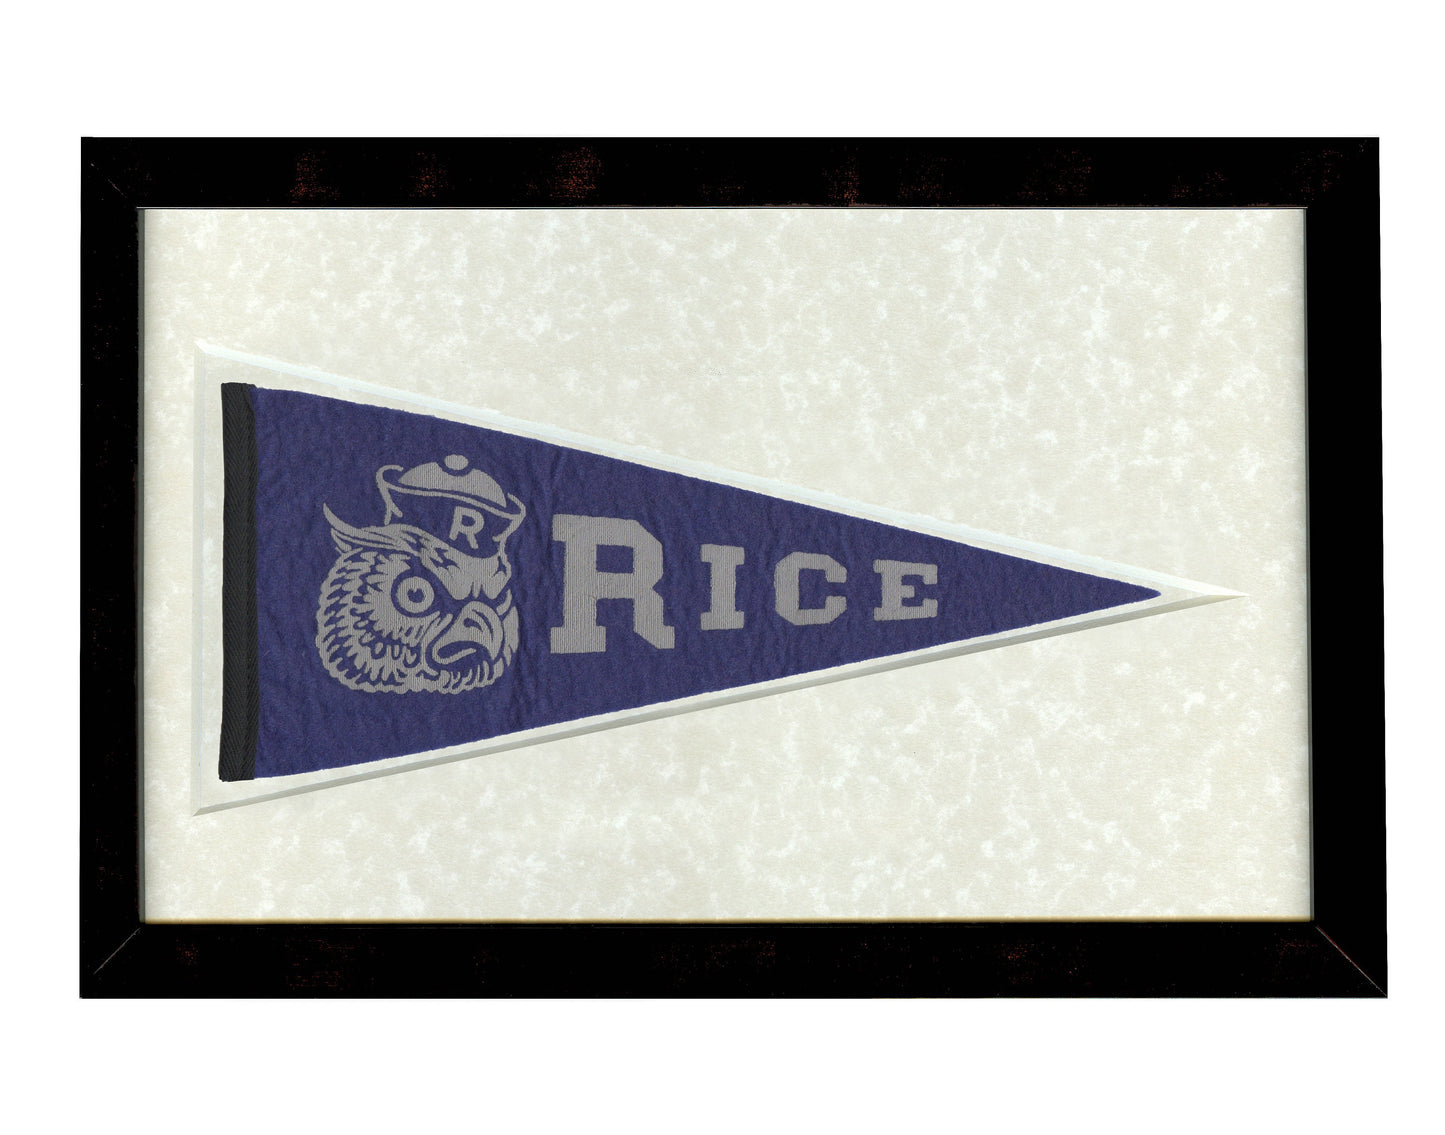 Vintage Rice University pennant circa 1960s